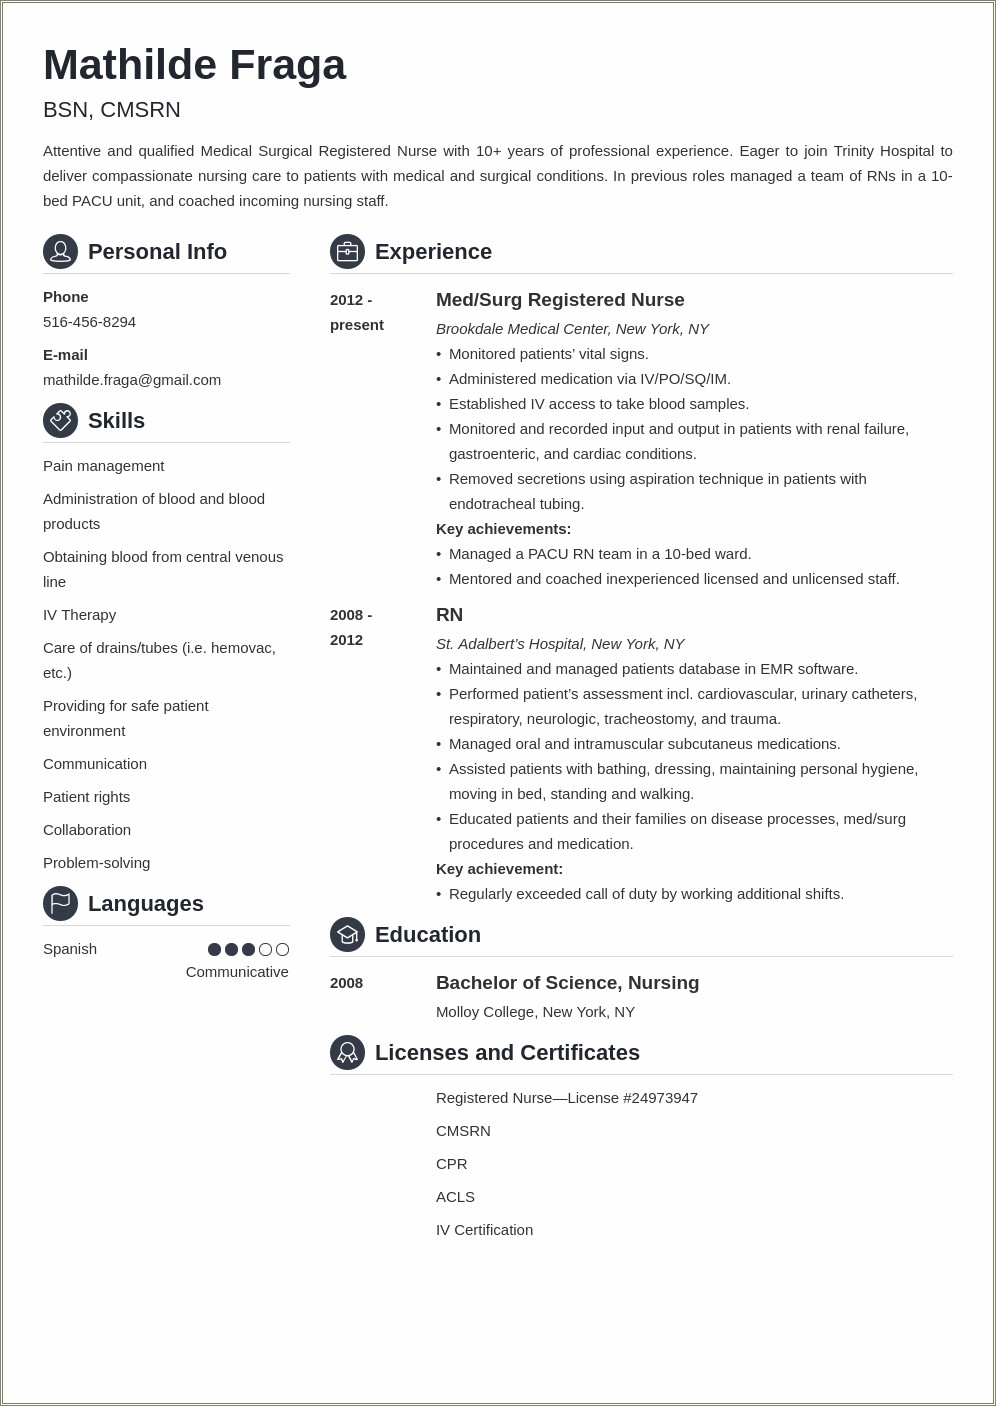 Resume Description Of Medical Surgical Nurse